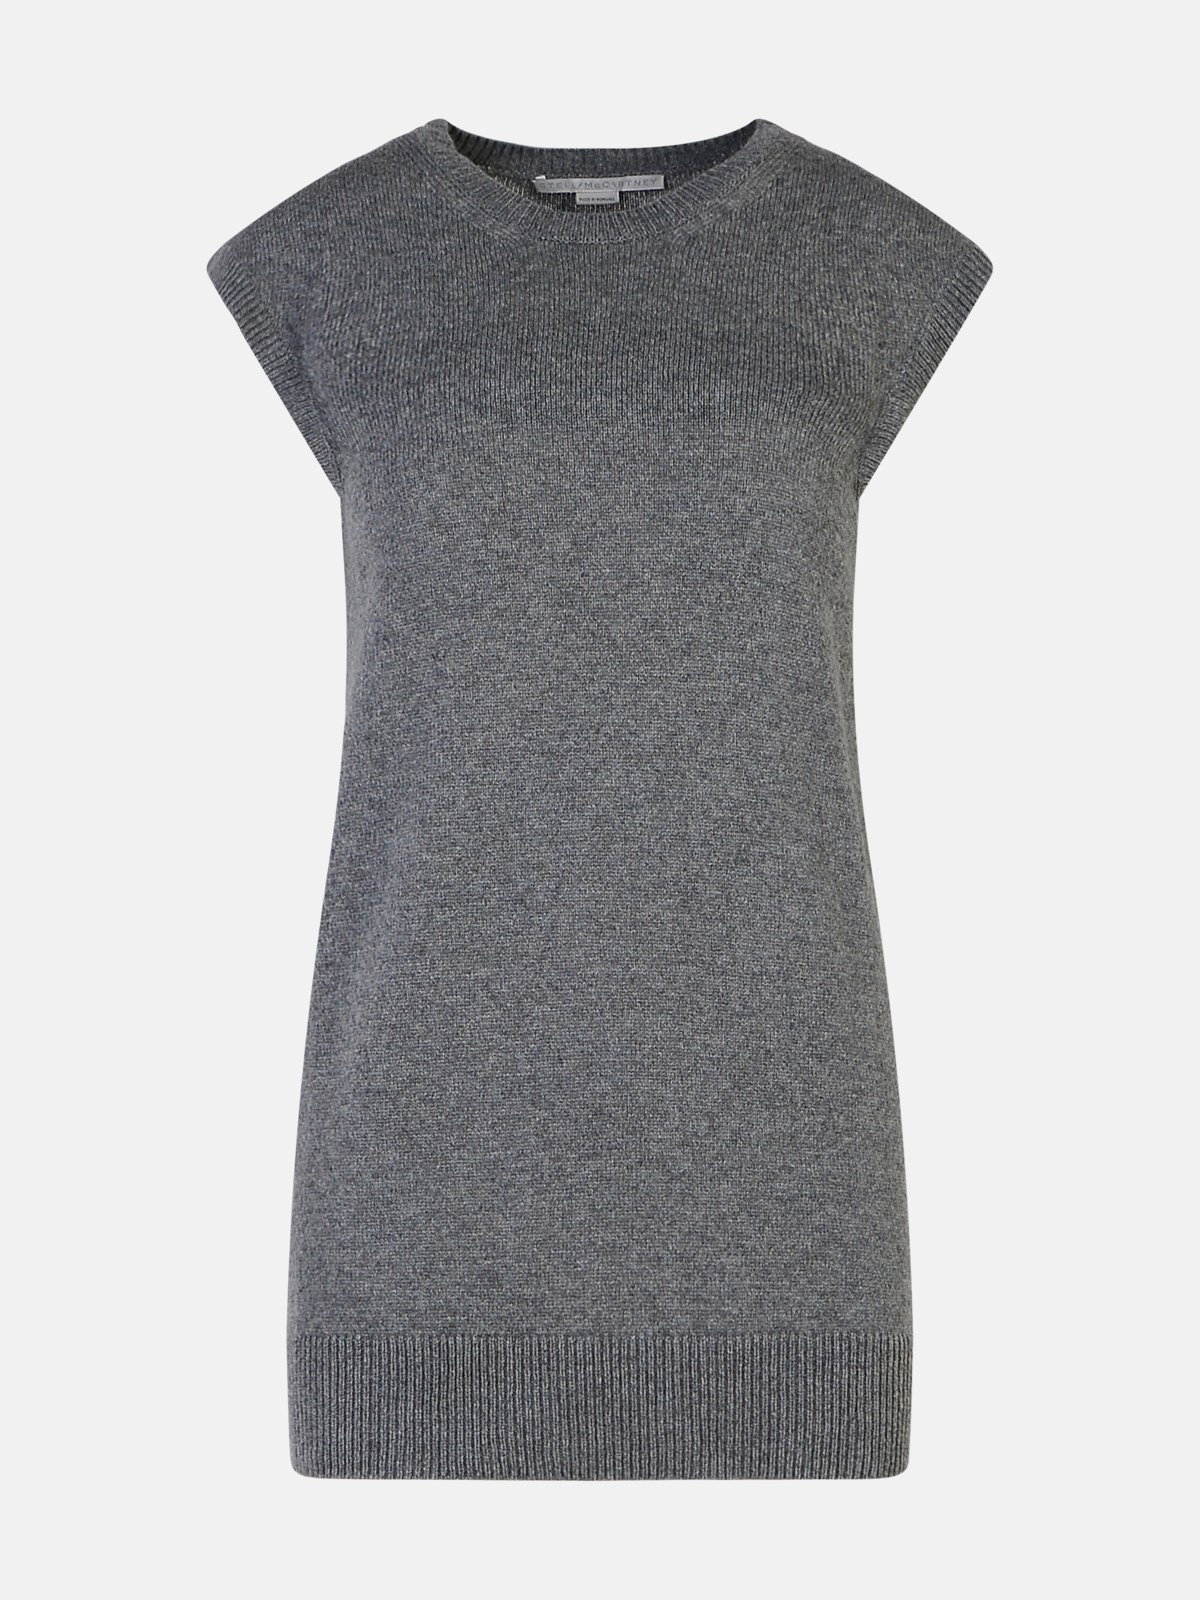 Stella Mccartney '' Sleeveless Grey Cashmere Sweater In Gray